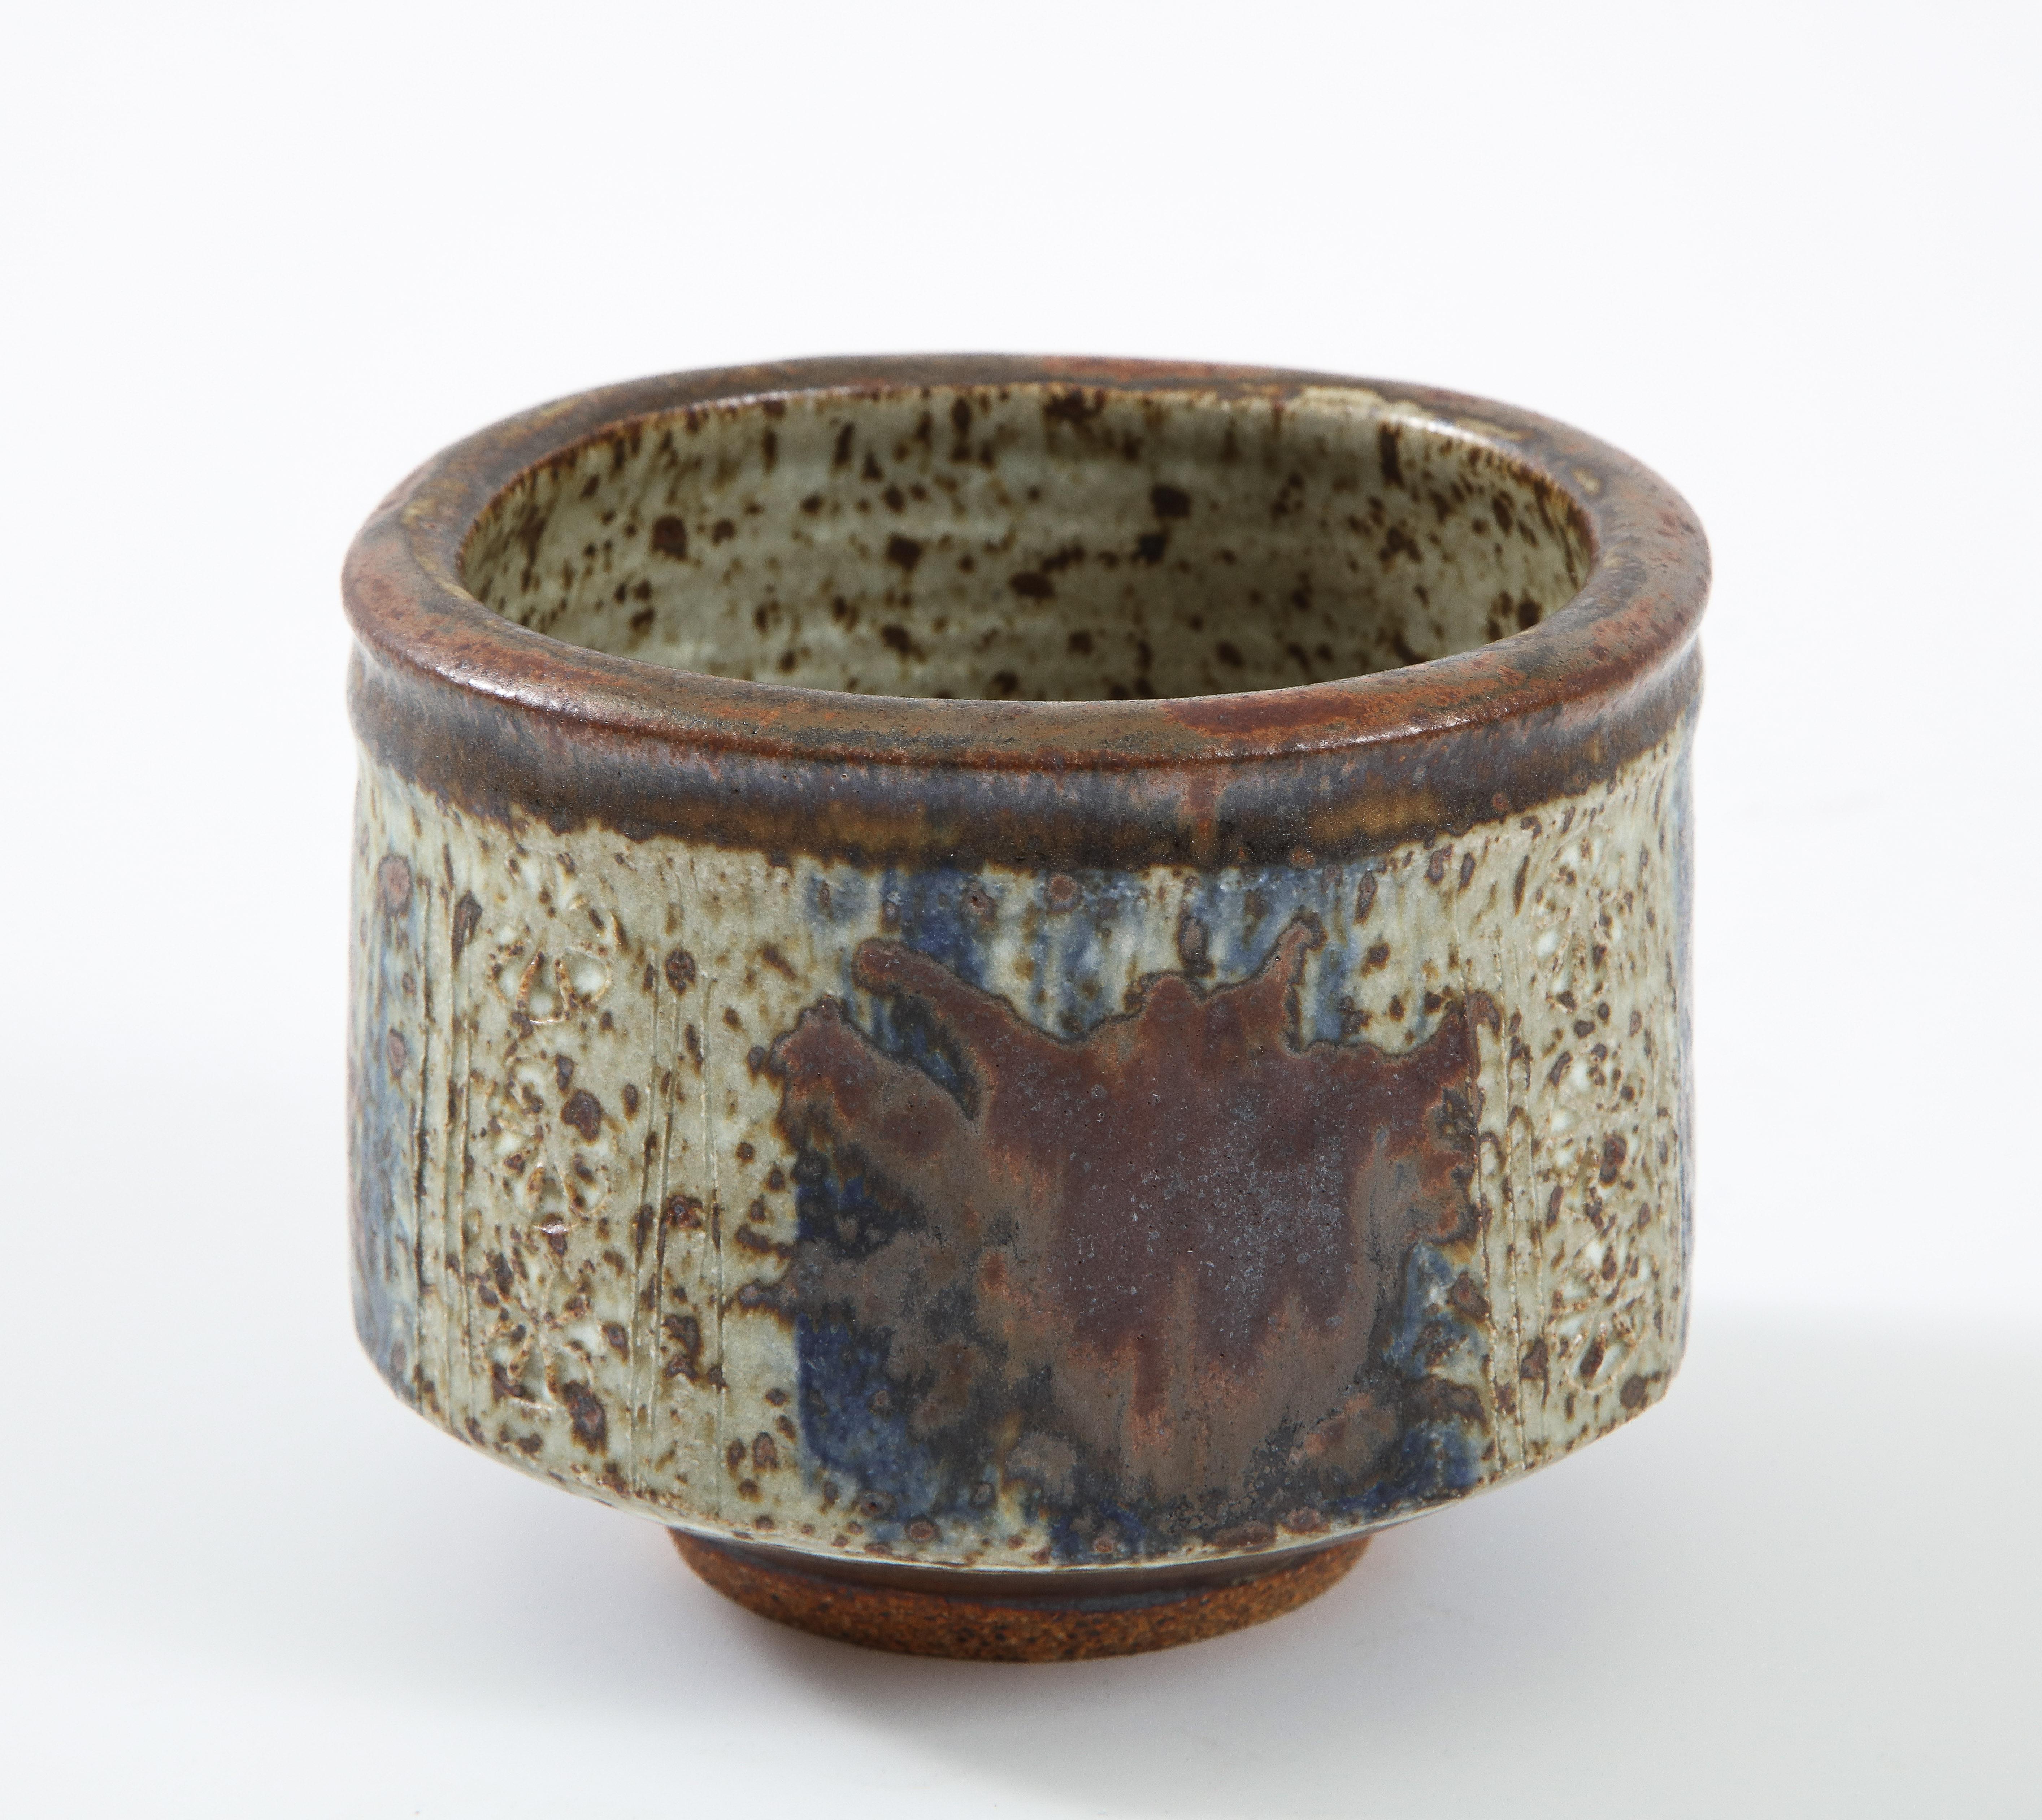 Otto & Vivika Heino stoneware bowl, b. Finland, California Potters, stoneware ceramic vessel, Squircle shape, hand formed with blue and rust colored glazes, signed. California, circa 1970.